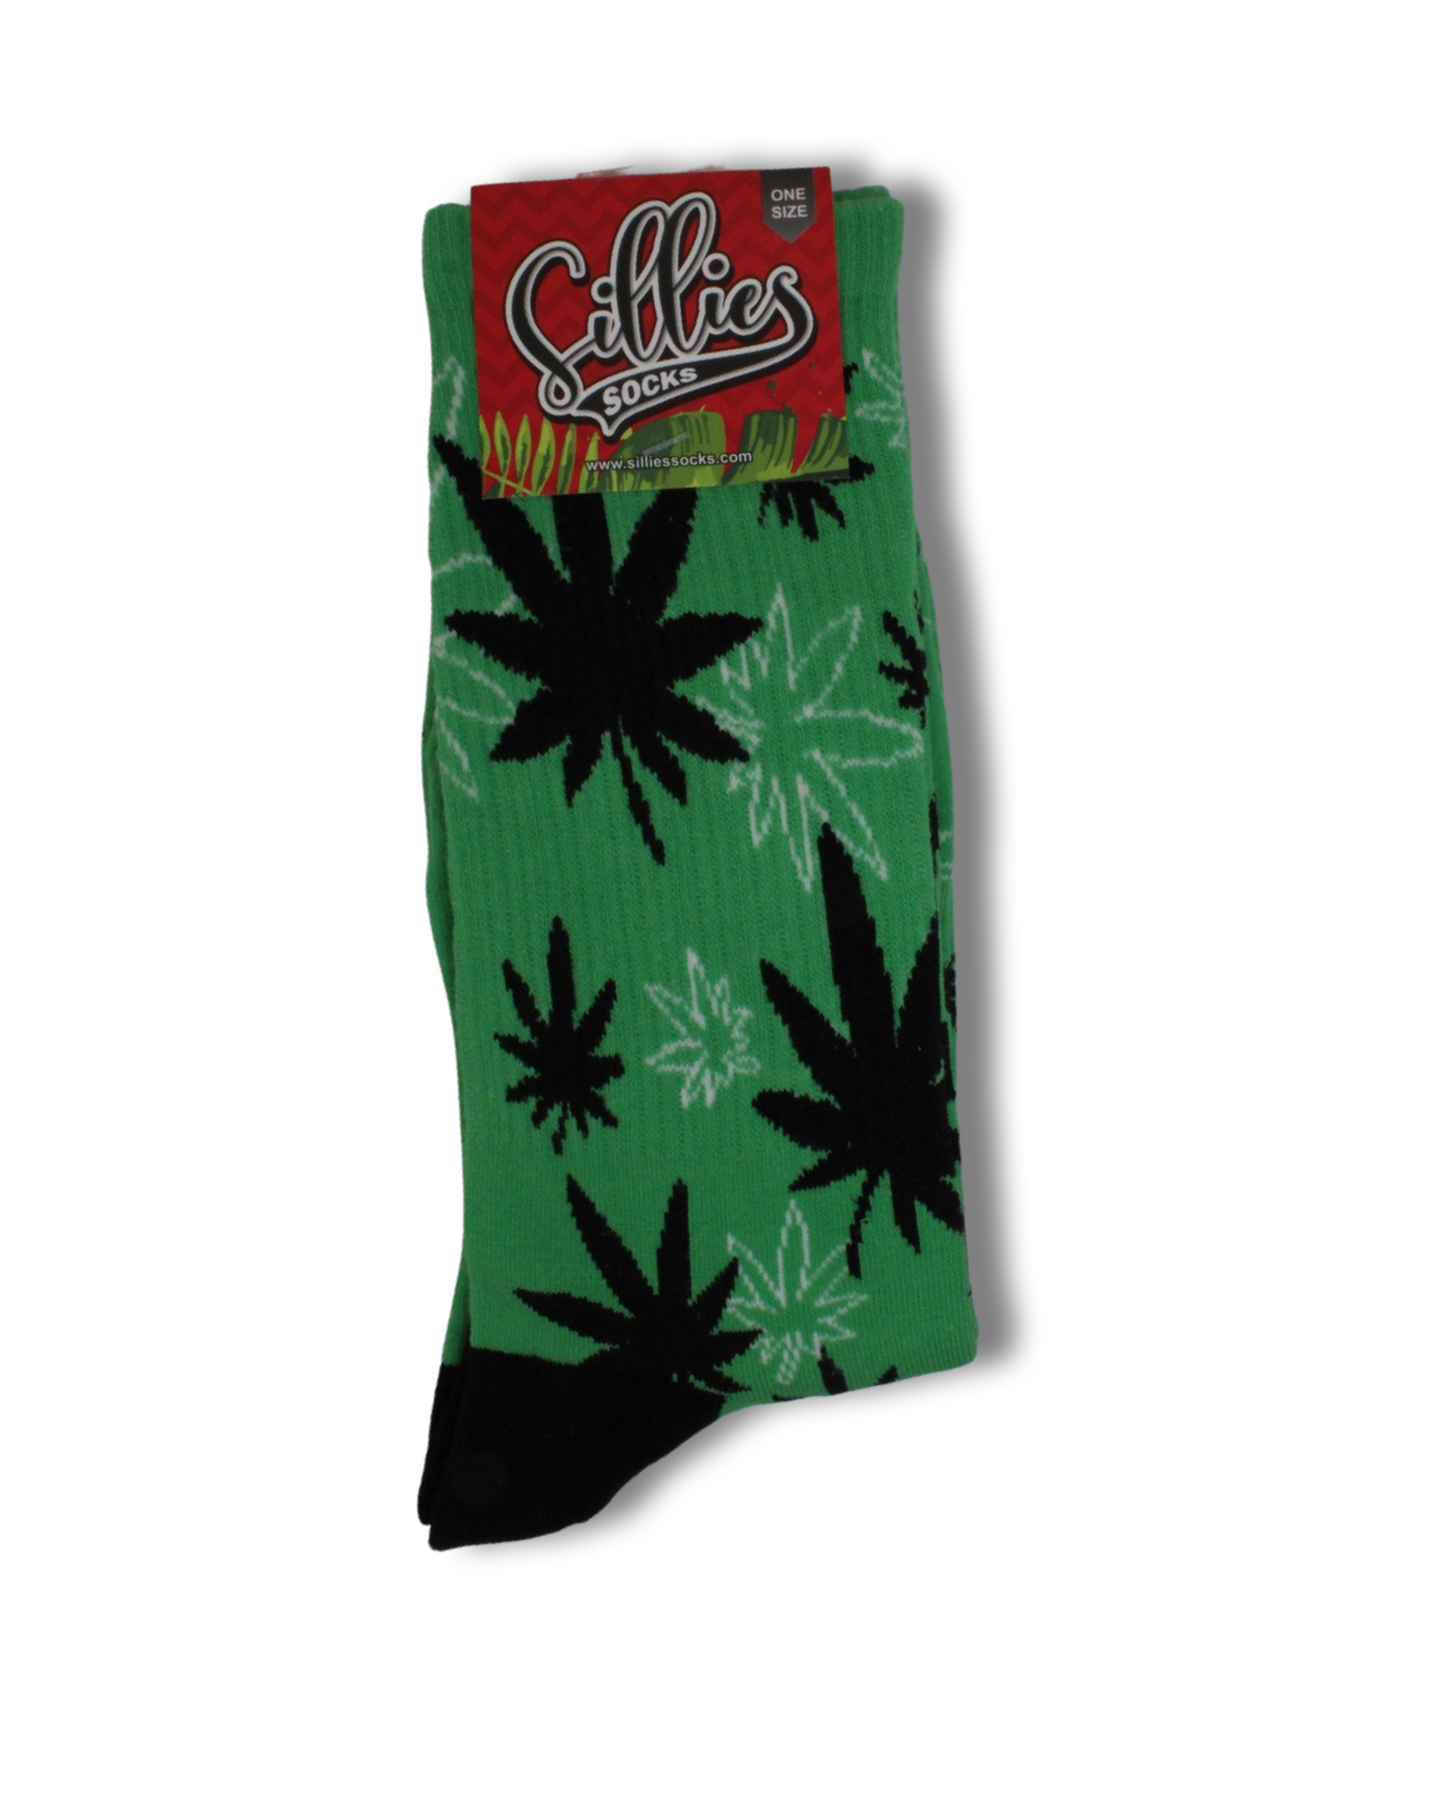 Sillies Socks One Size - Green and Black Hemp Leaves